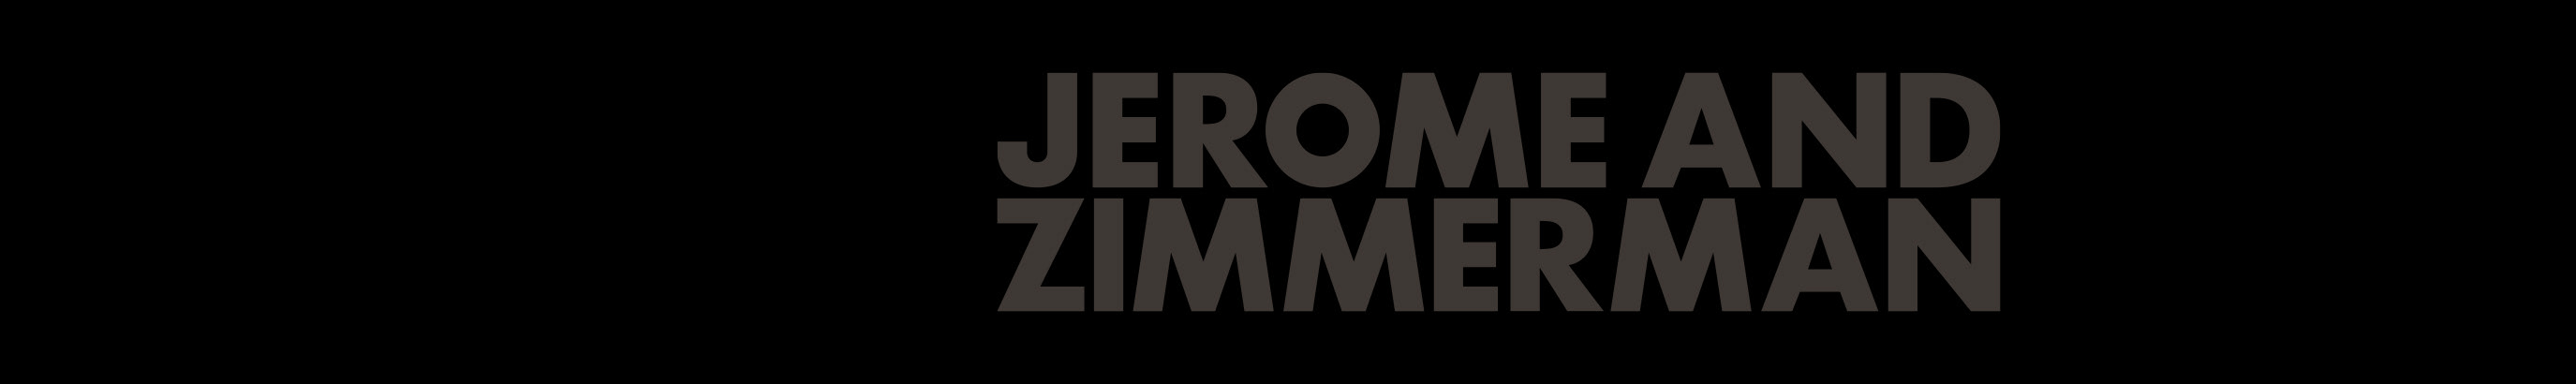 Баннер профиля Jerome & Zimmerman